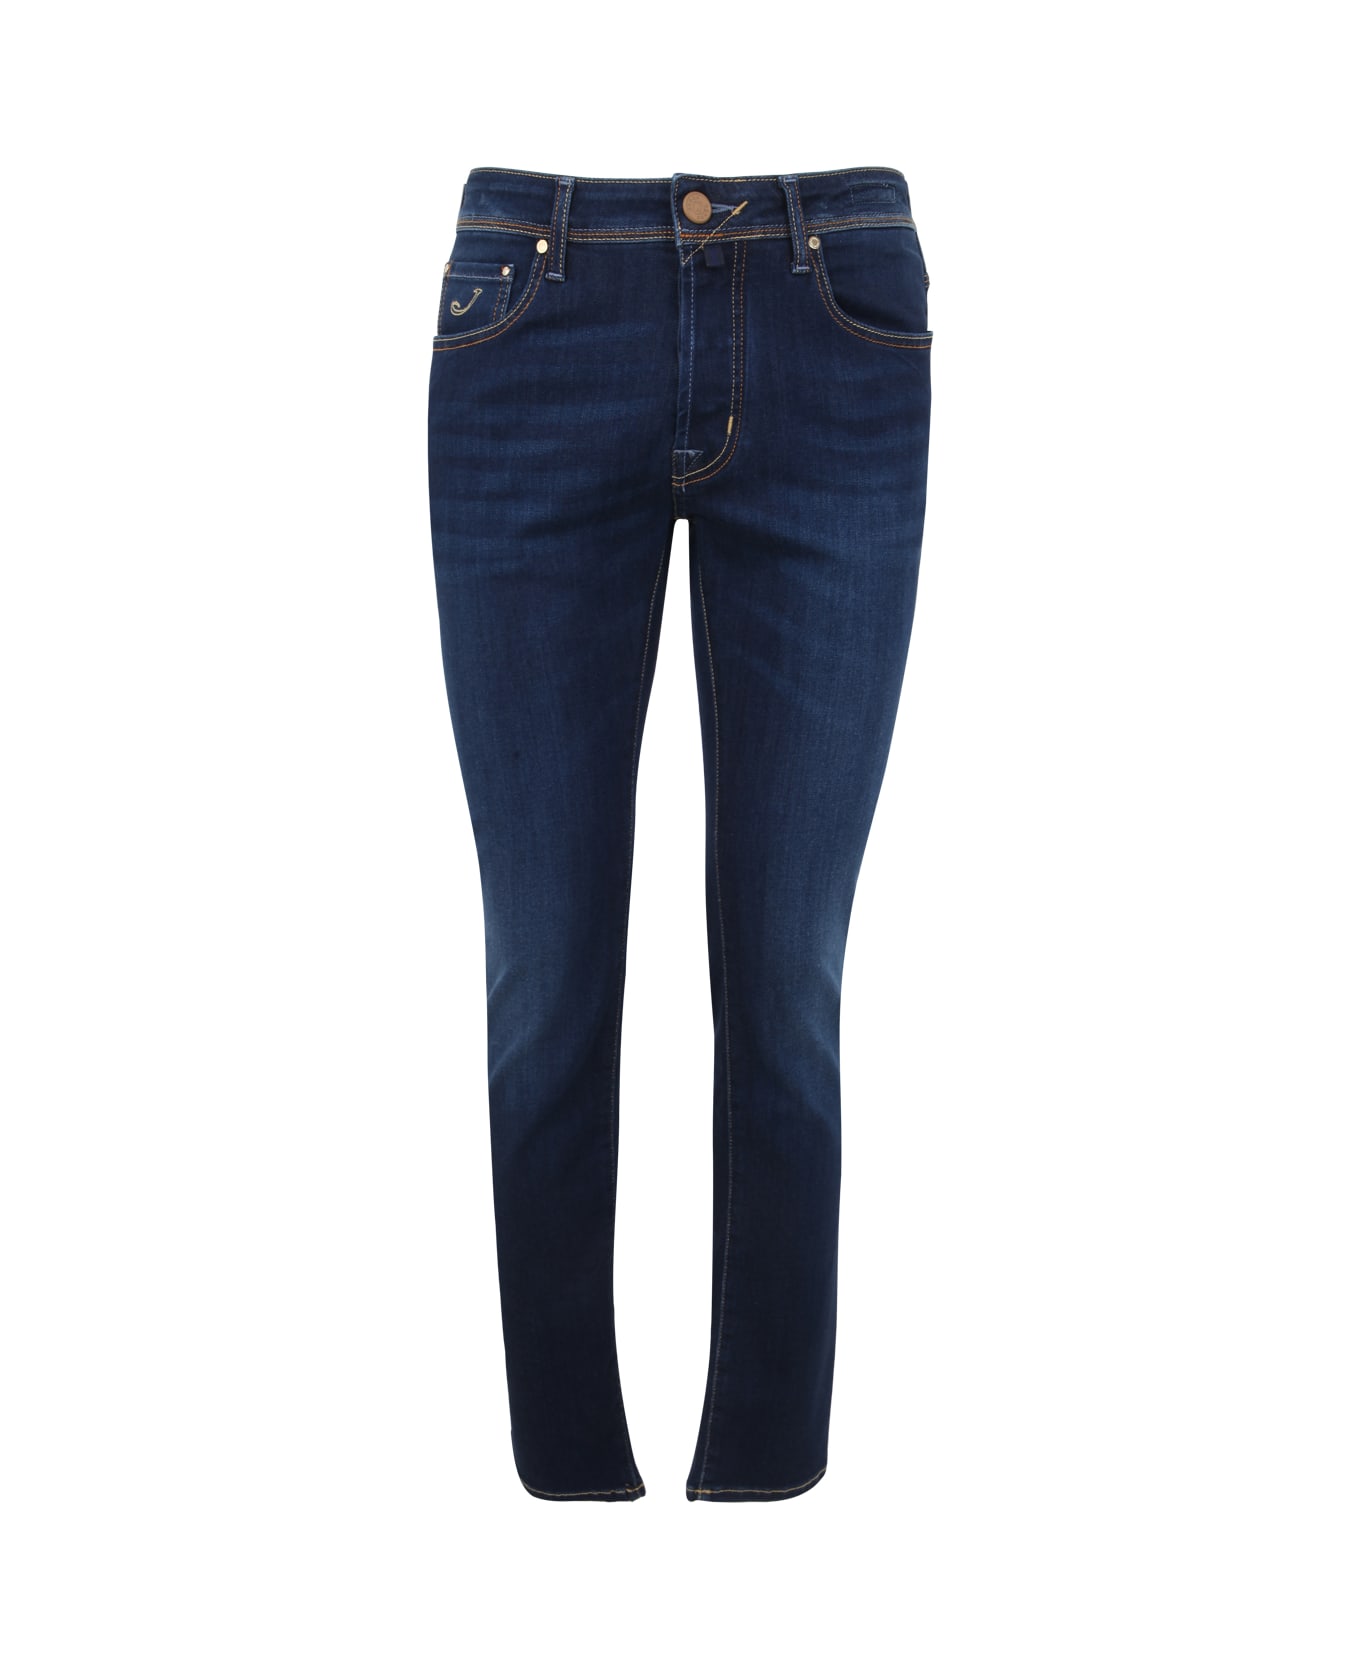 Jacob Cohen Bard Slim Fit Five Pocket Jeans - Denim